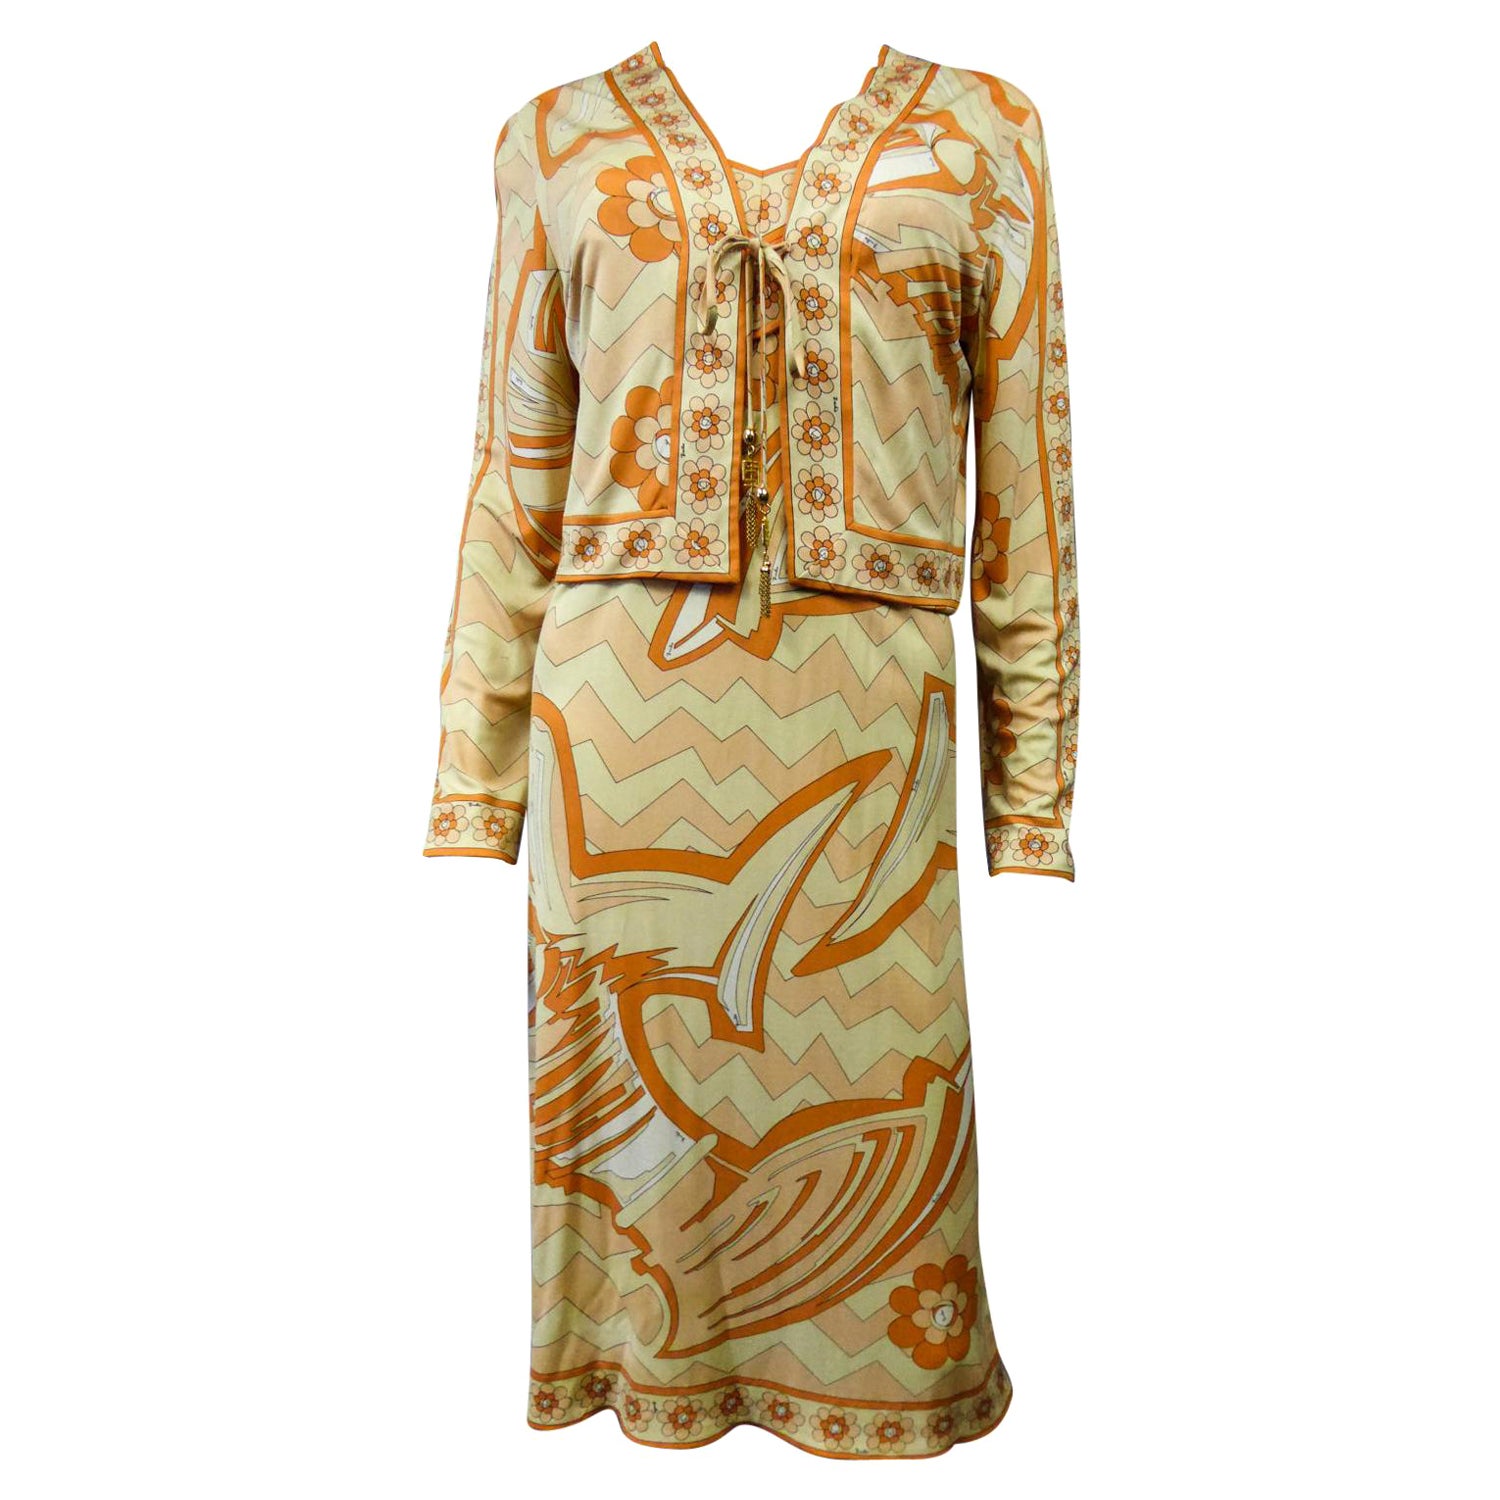 Emilio Pucci - Ensemble robe et gilet en jersey imprimé, circa 1960/1970 en vente